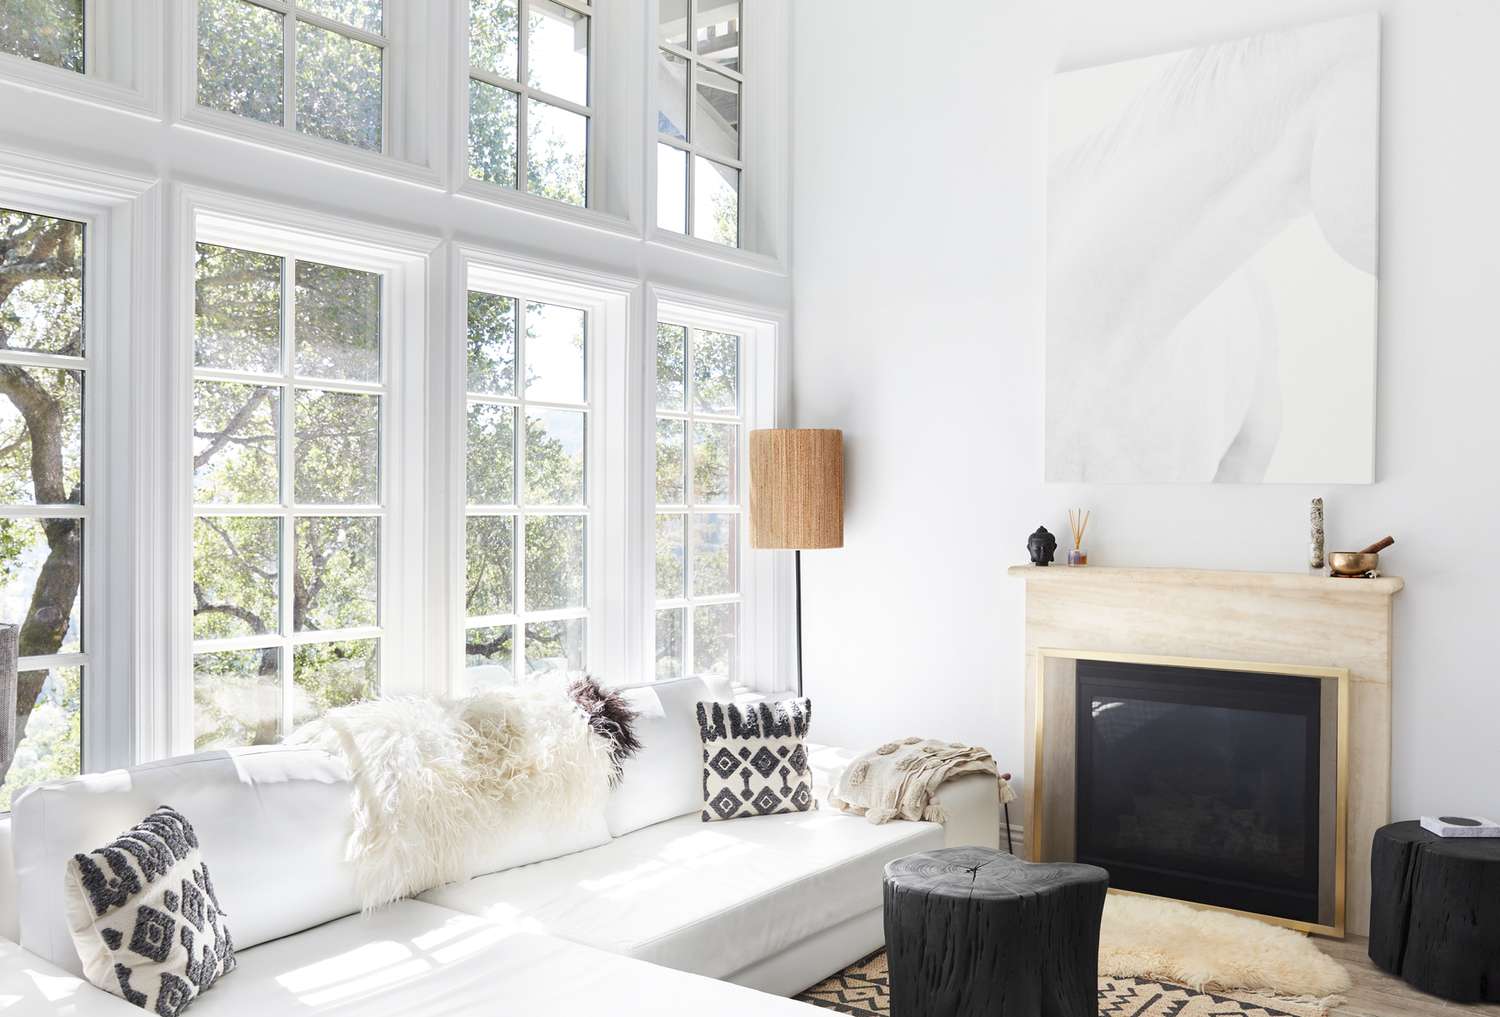 Interior de casa escandinava com texturas naturais